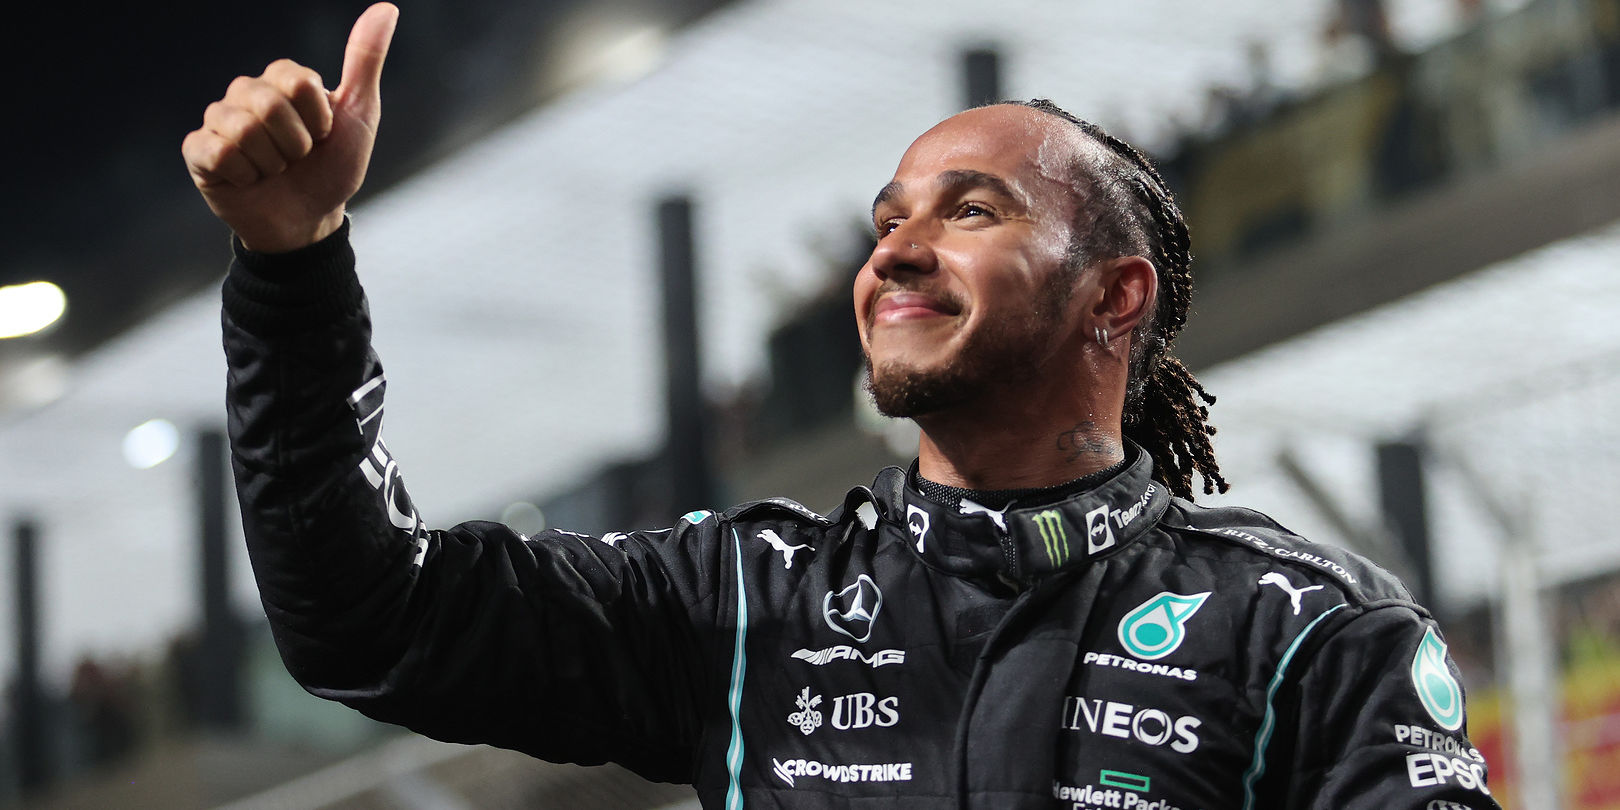 2021 Saudi Arabian Grand Prix, Sunday - Lewis Hamilton